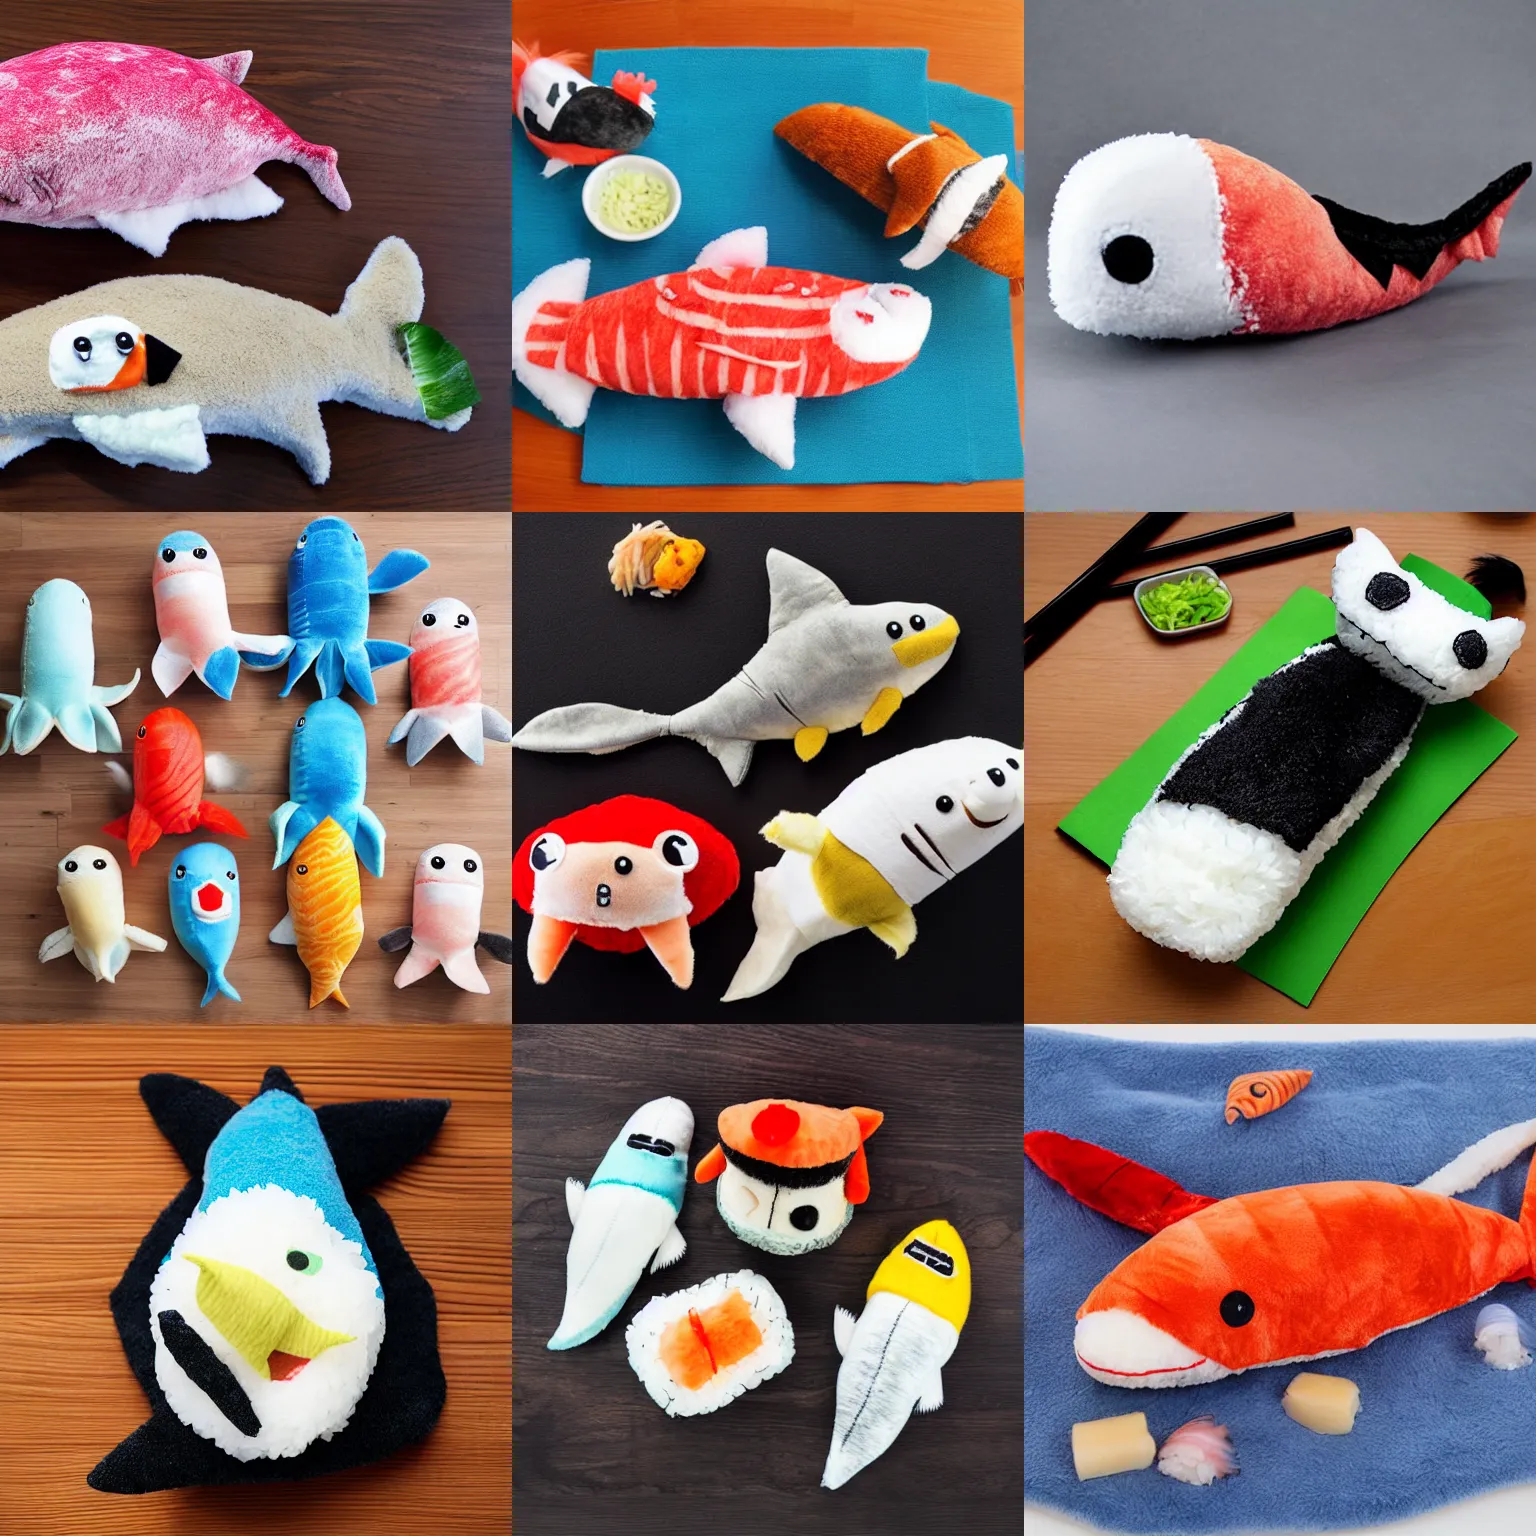 Prompt: Plush shark sushi, stuffed toy, rice, fish